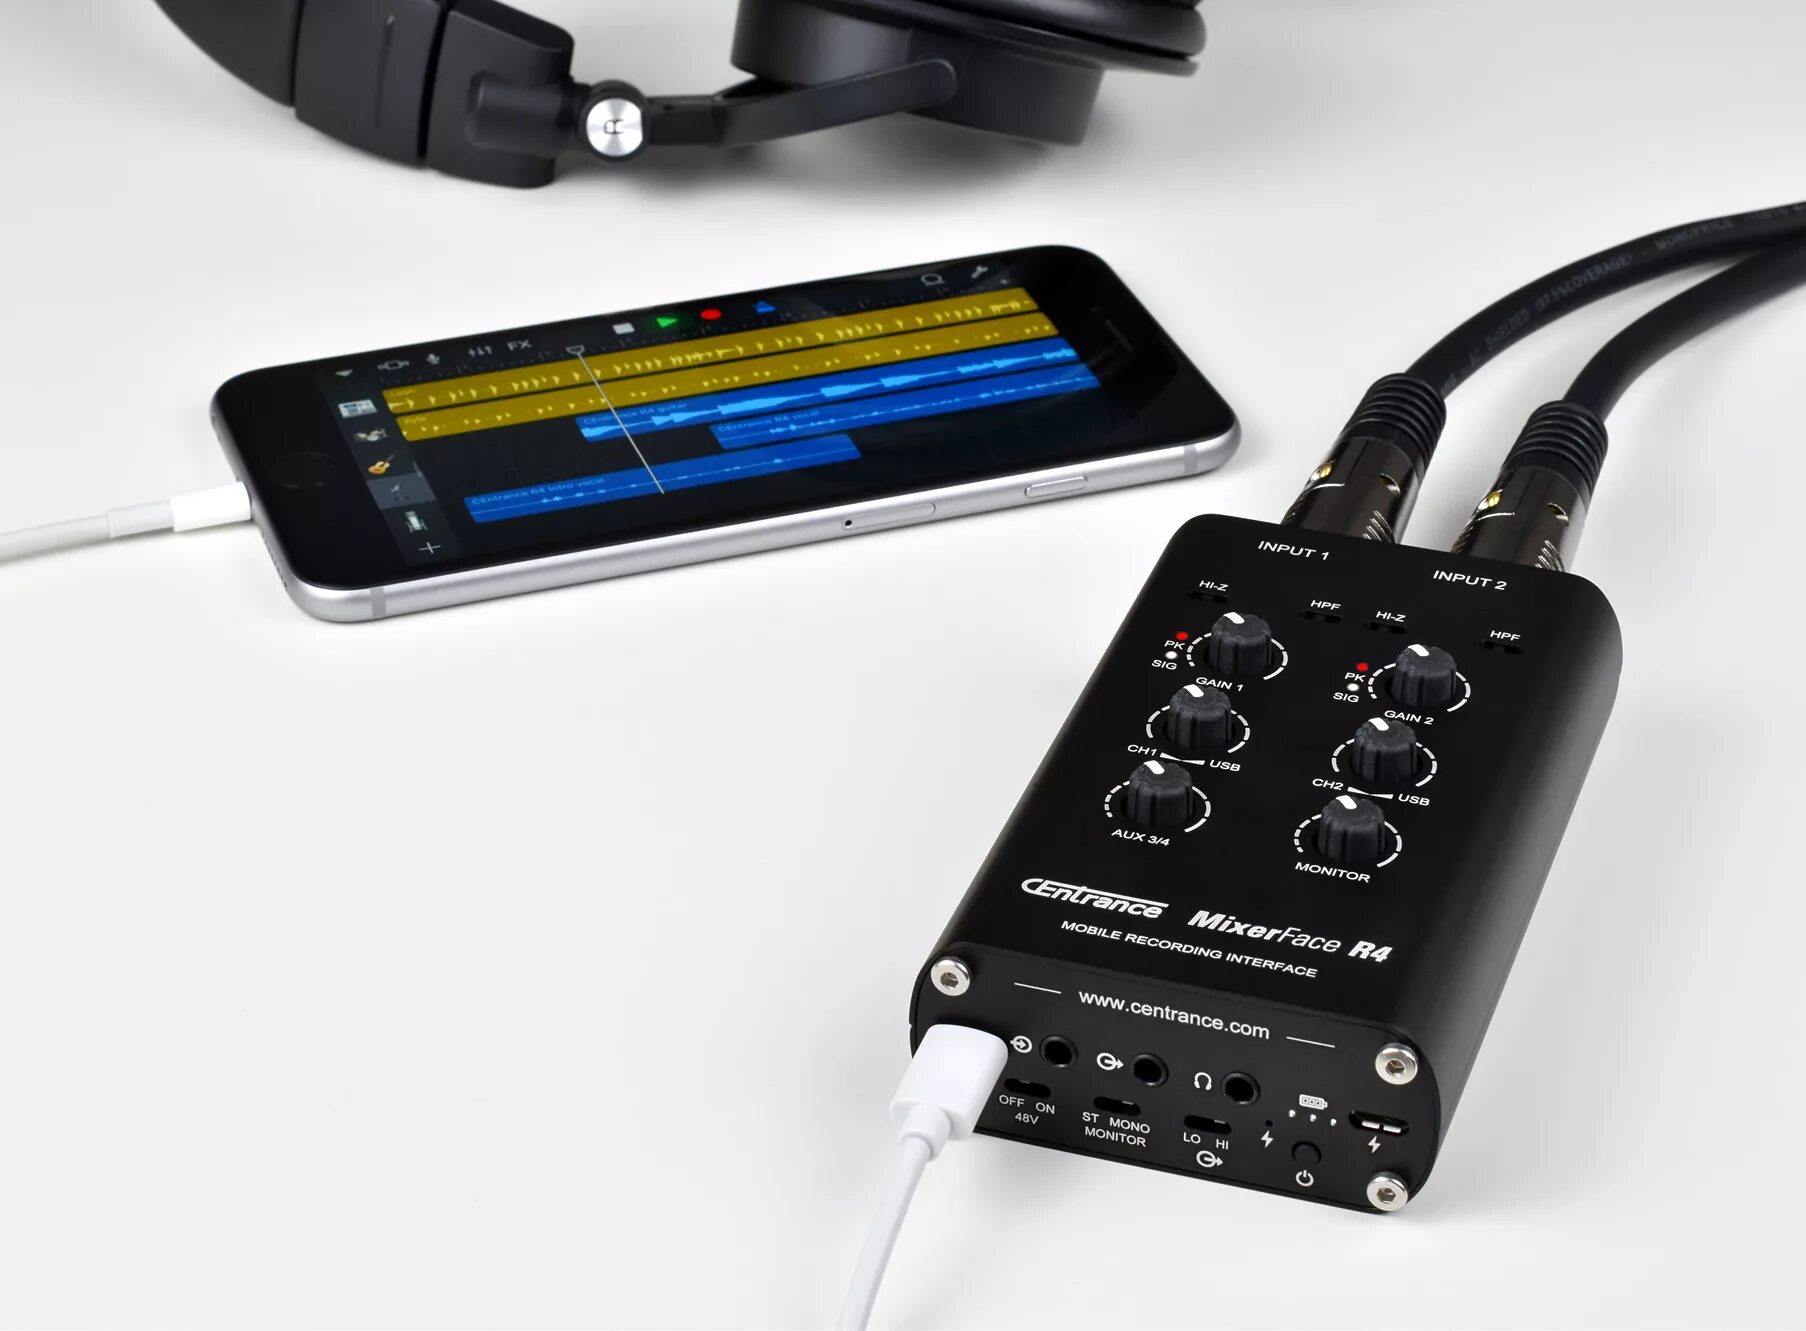 Channeling device. Звуковой Интерфейс. Audio recording interface. CENTRANCE С эквалайзером. Android USB interface.